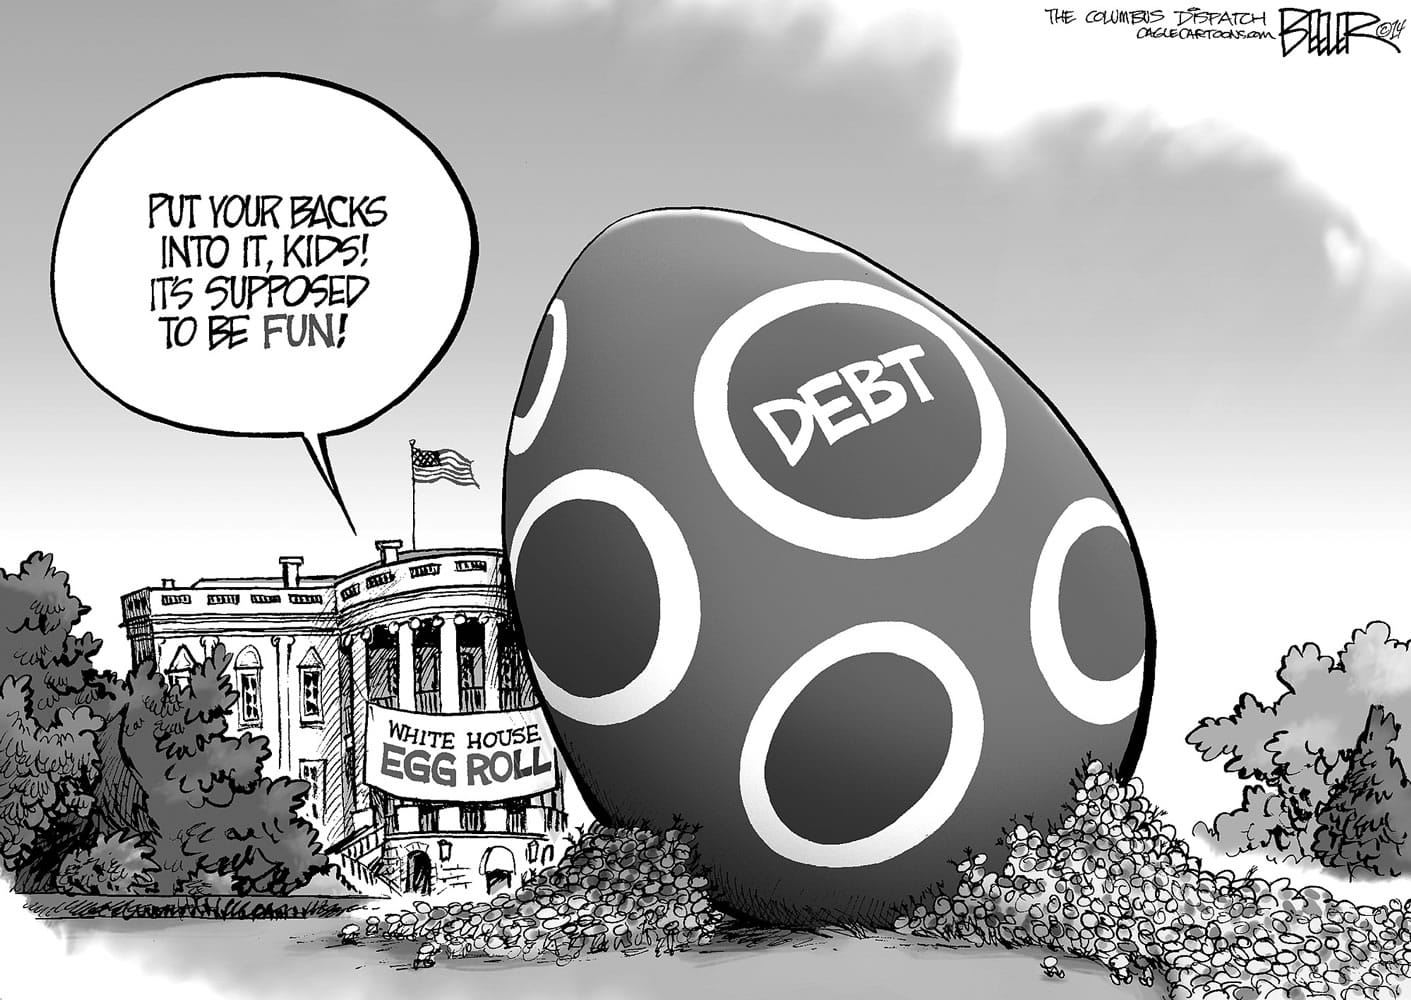 April 25: Debt Rollover